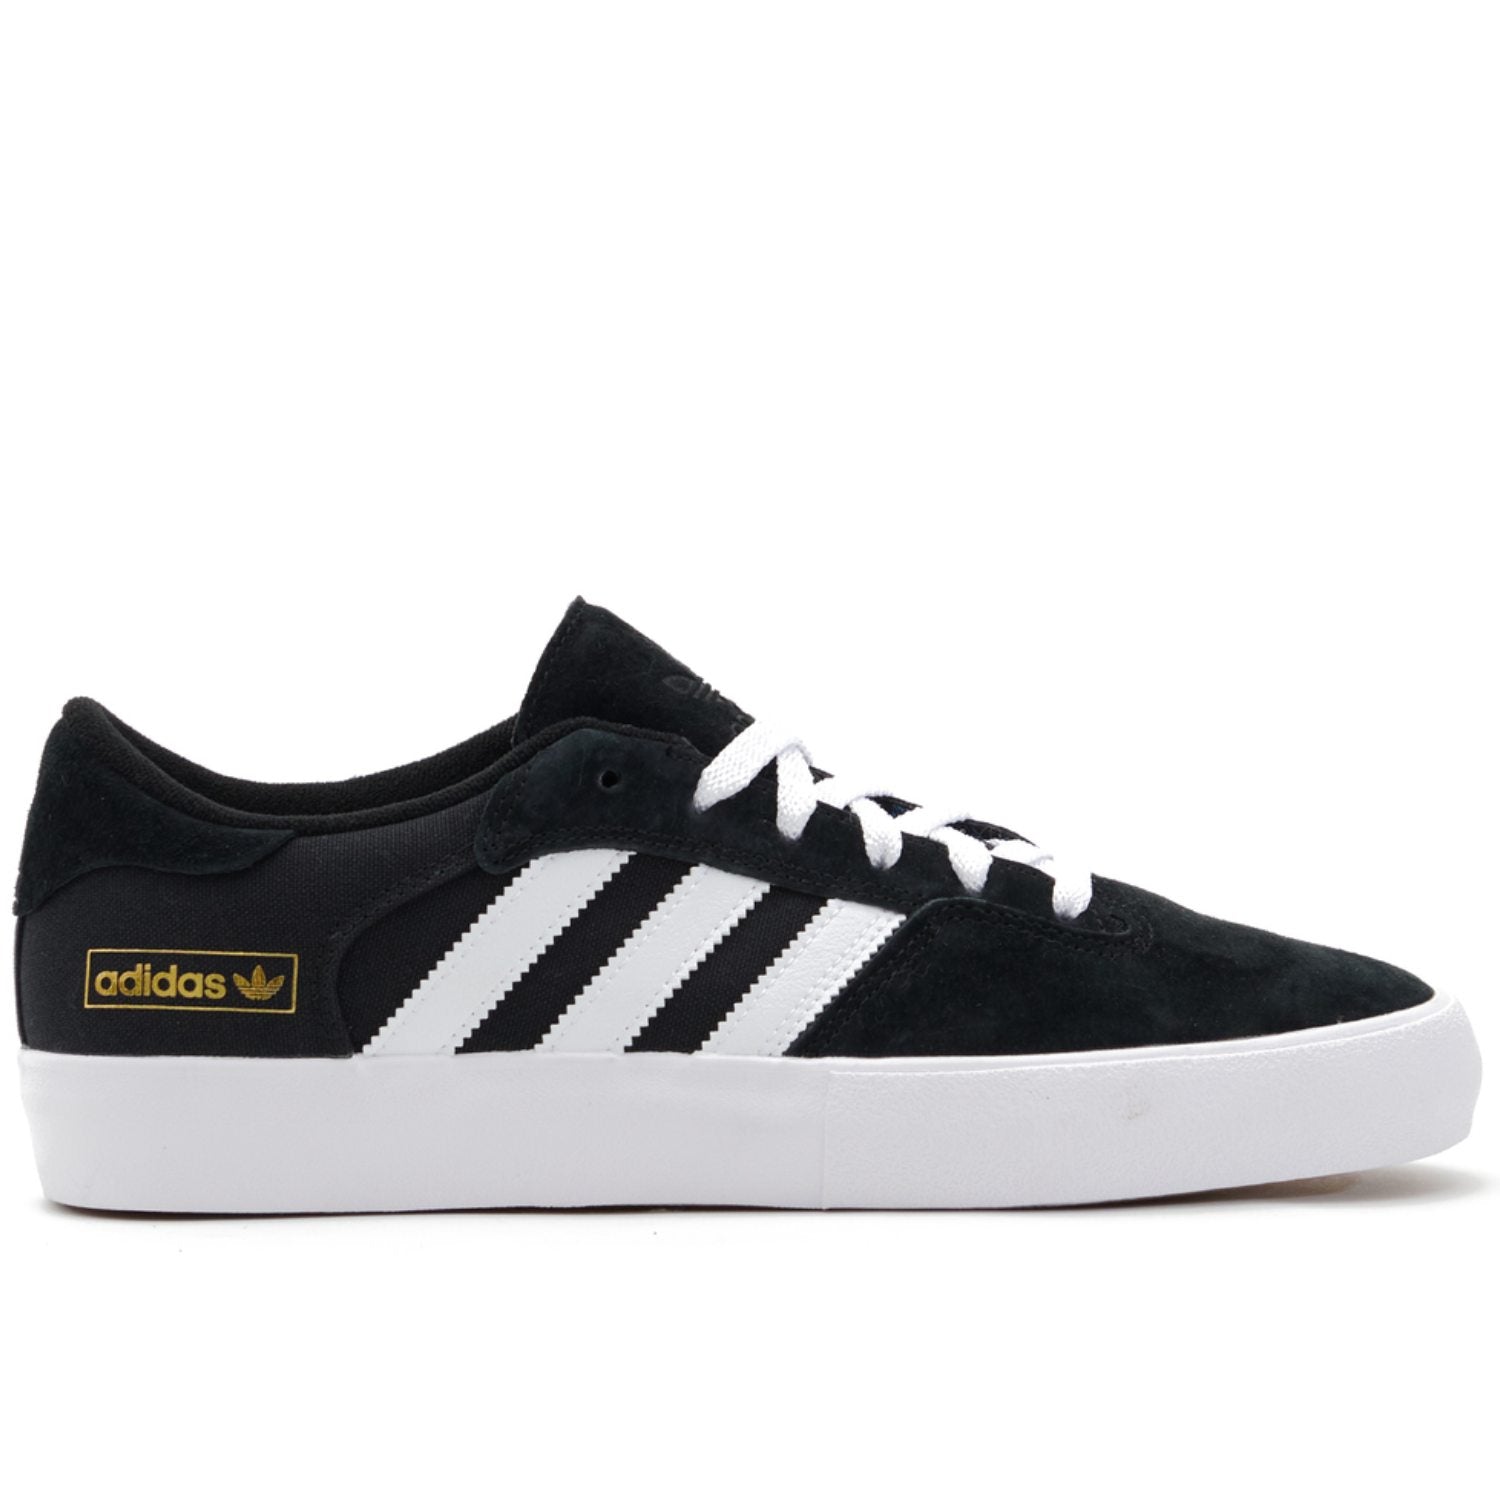 Adidas - Matchbreak Super Shoes - Black/White